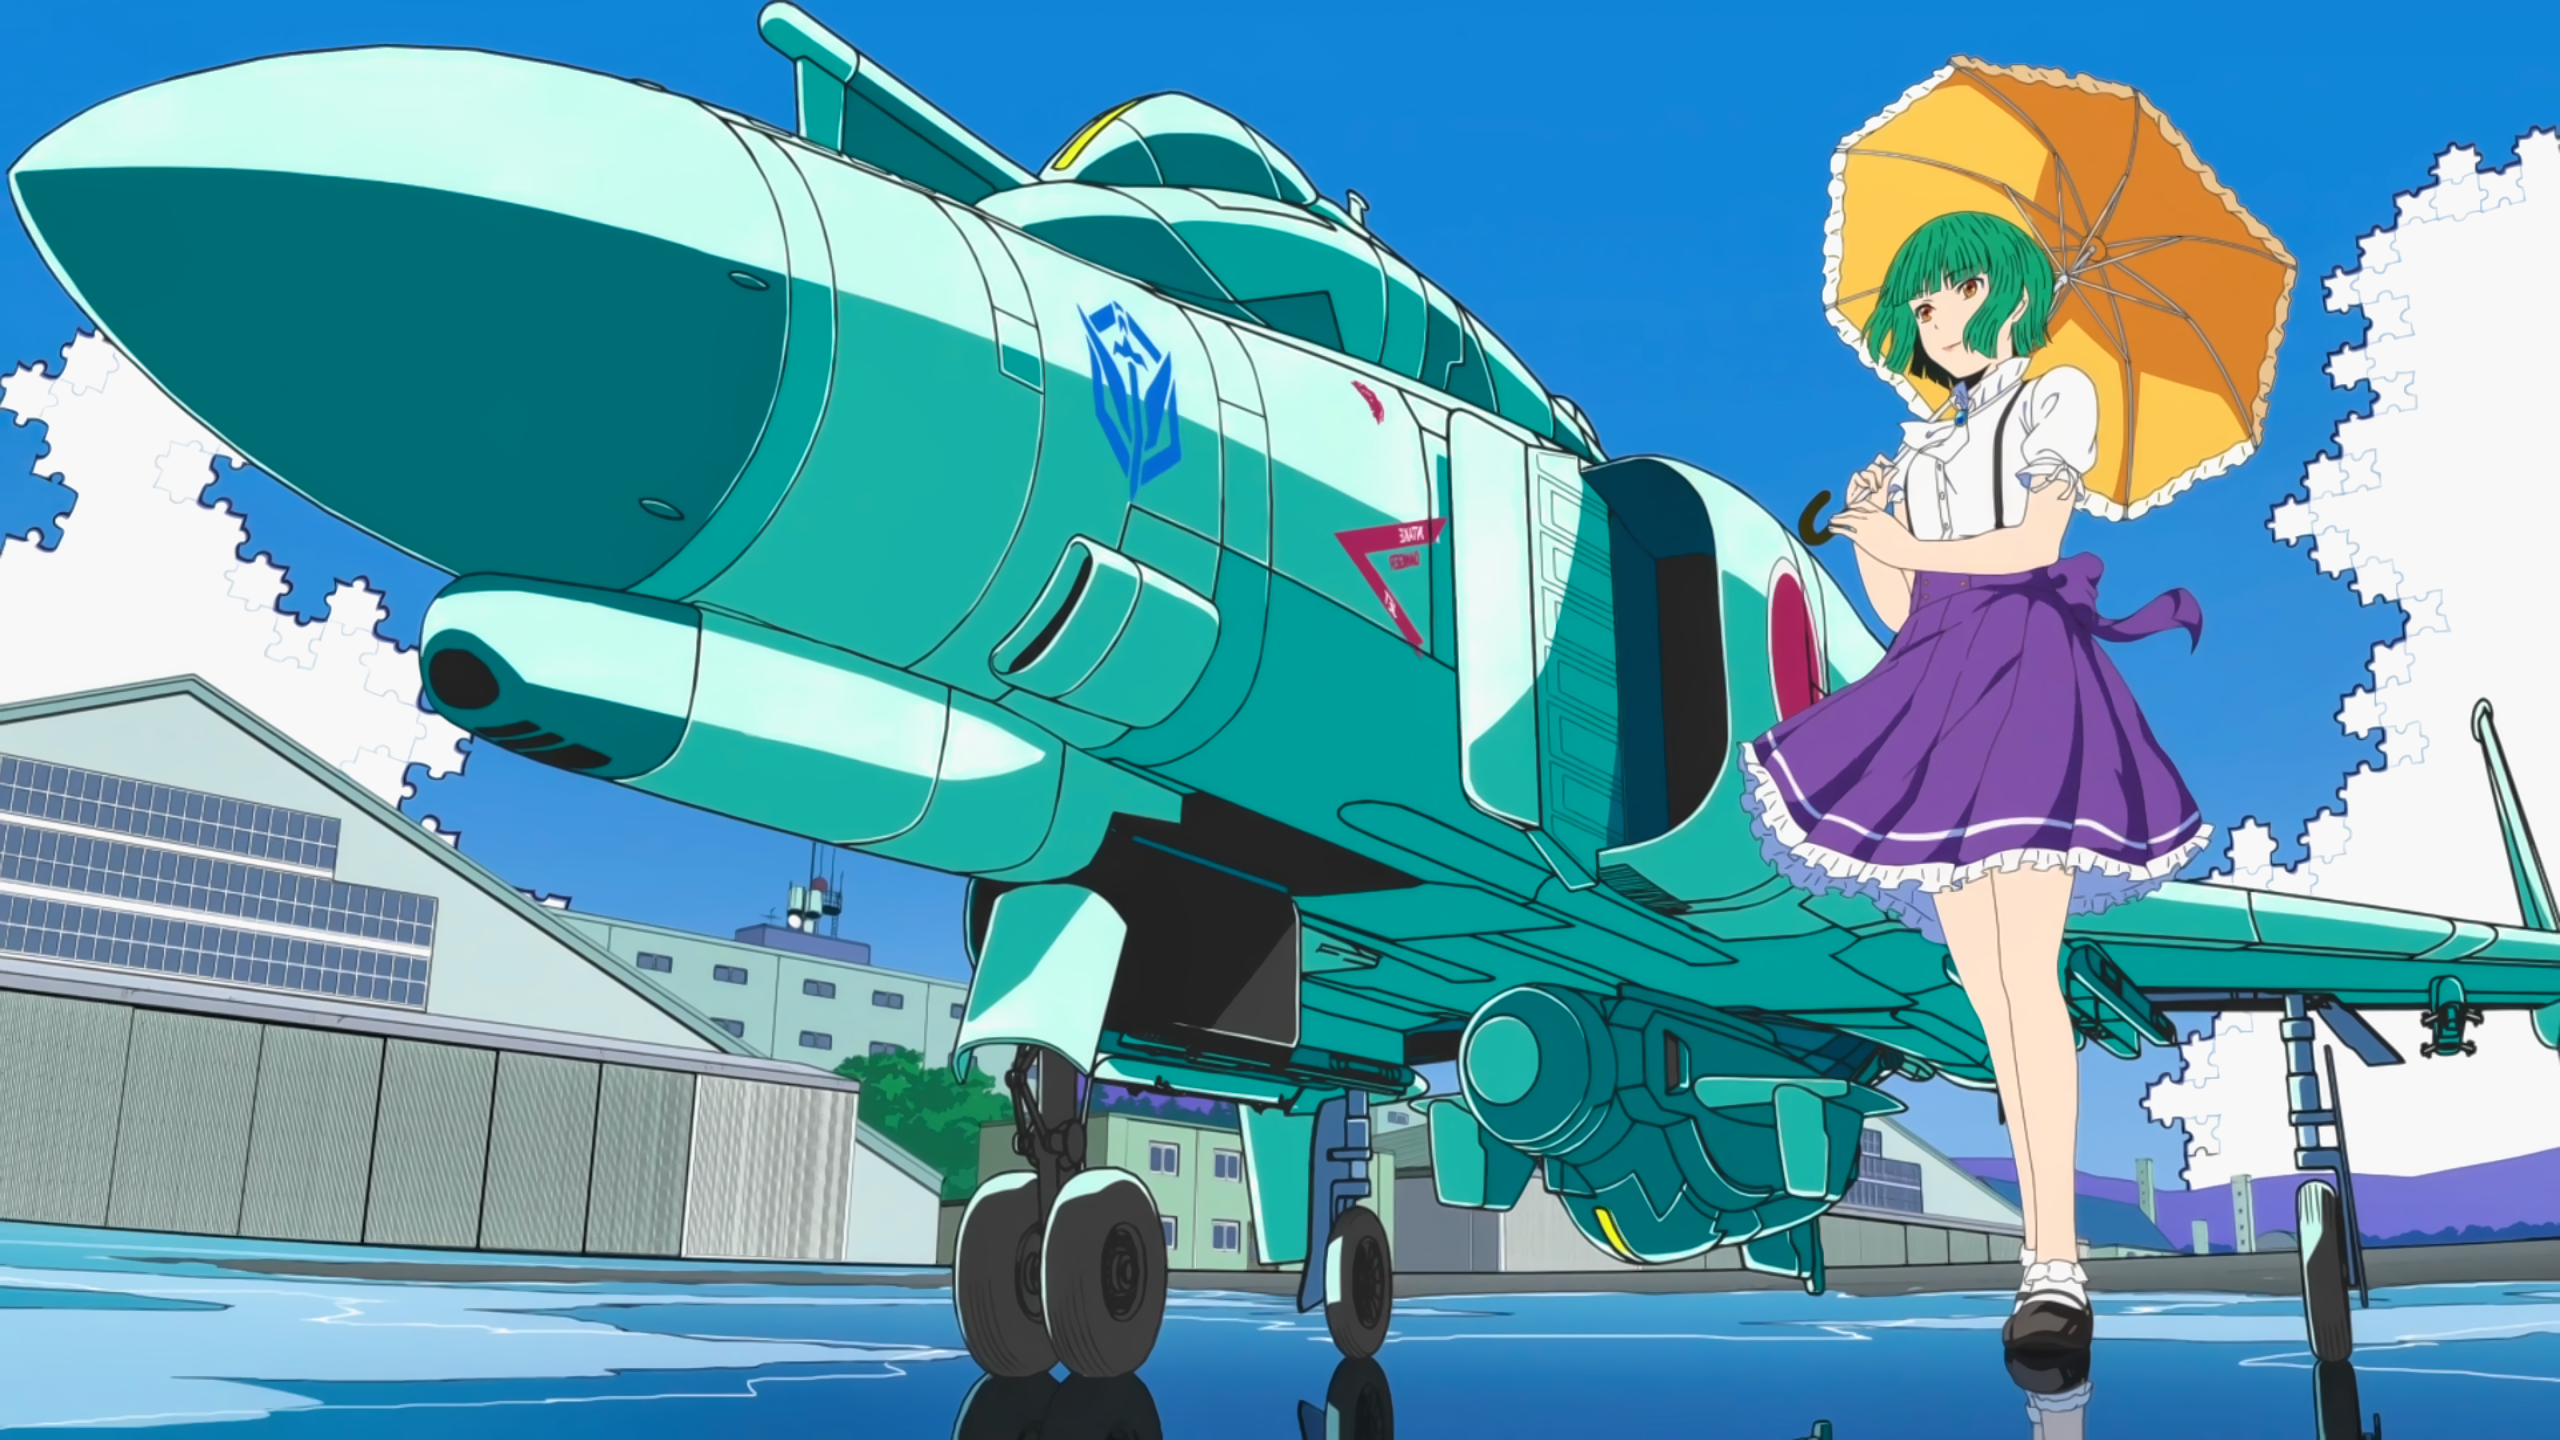 Anime Girly Air Force HD Wallpaper by Sanoboss